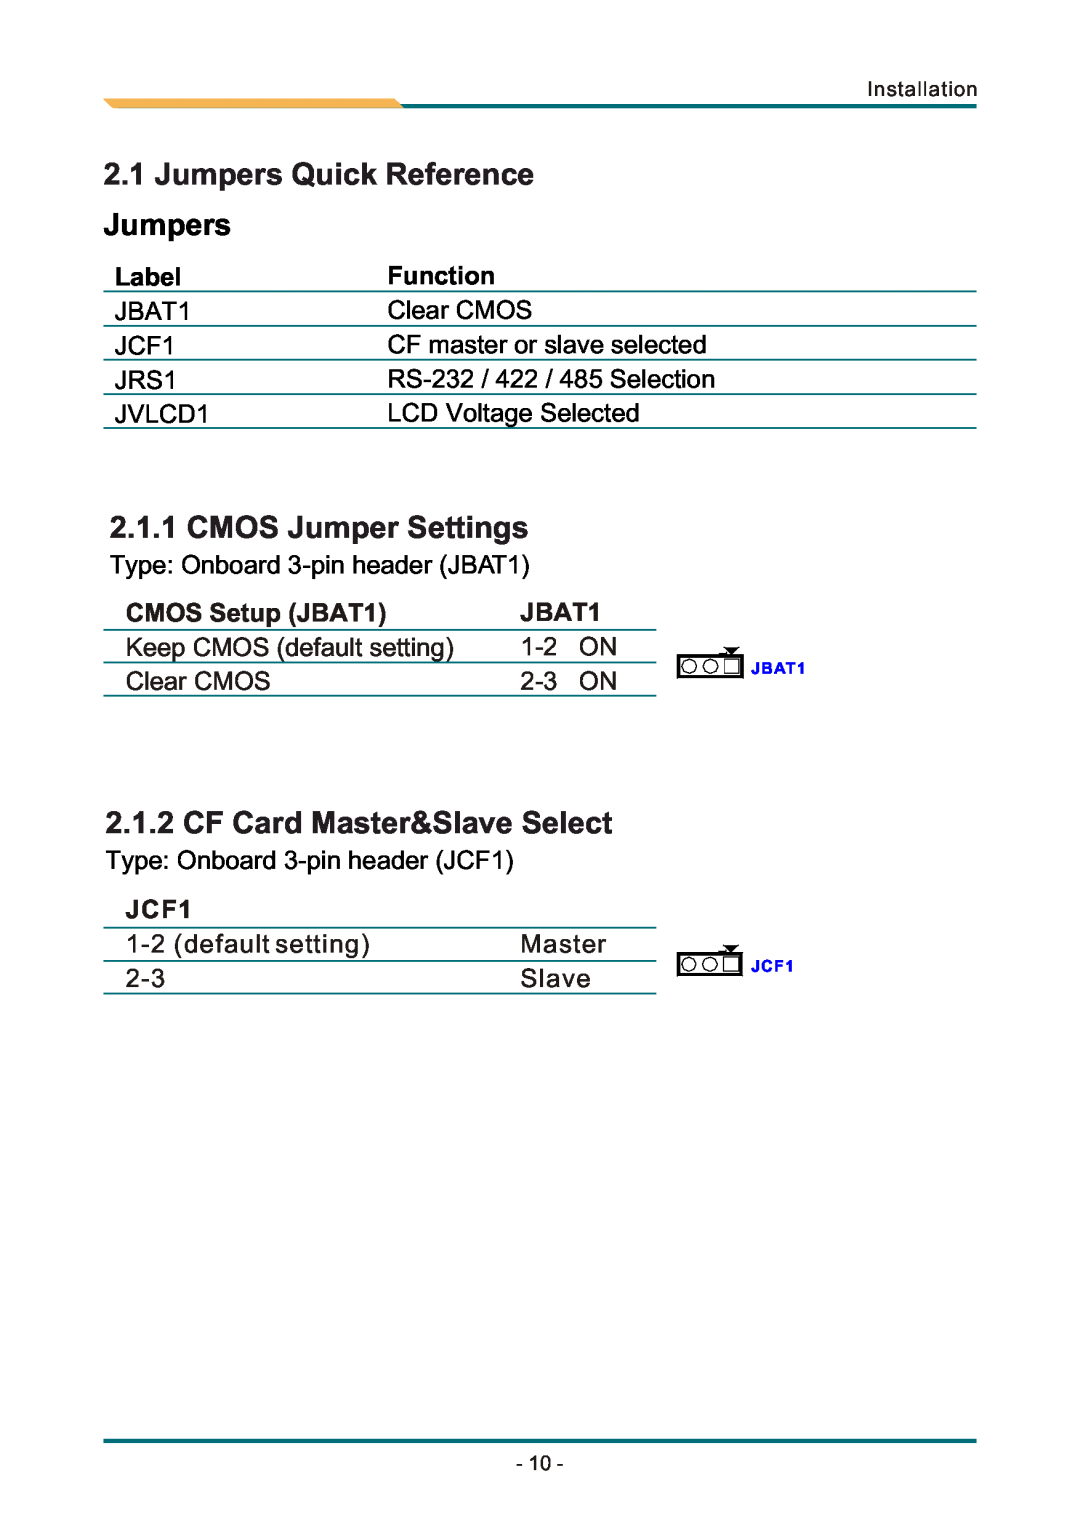 AMD SBX-5363 manual Jumpers Quick Reference Jumpers, CMOS Setup JBAT1, JCF1, Label, Function 